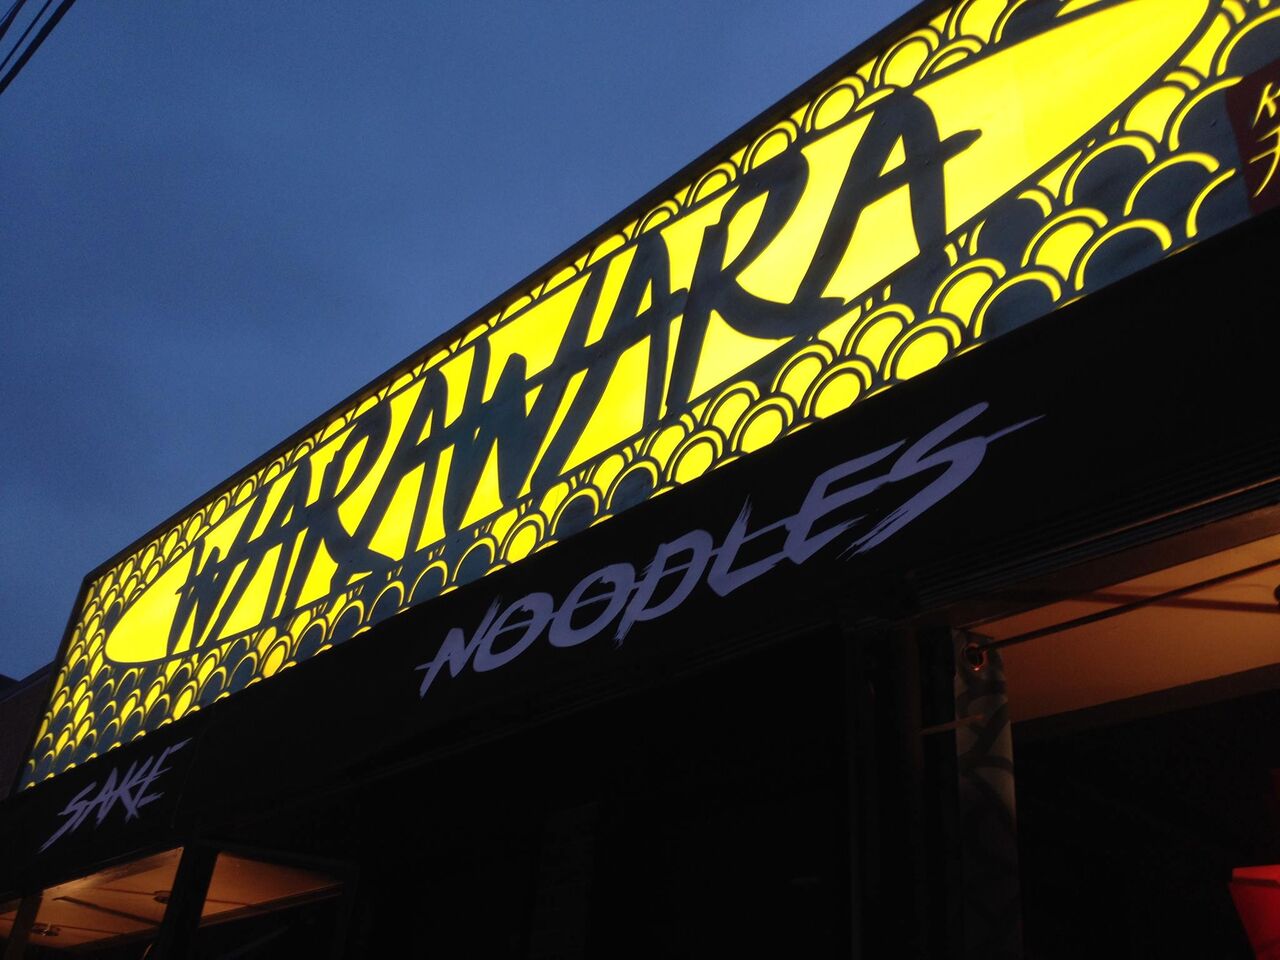 A photo of Wara Wara Restaurant